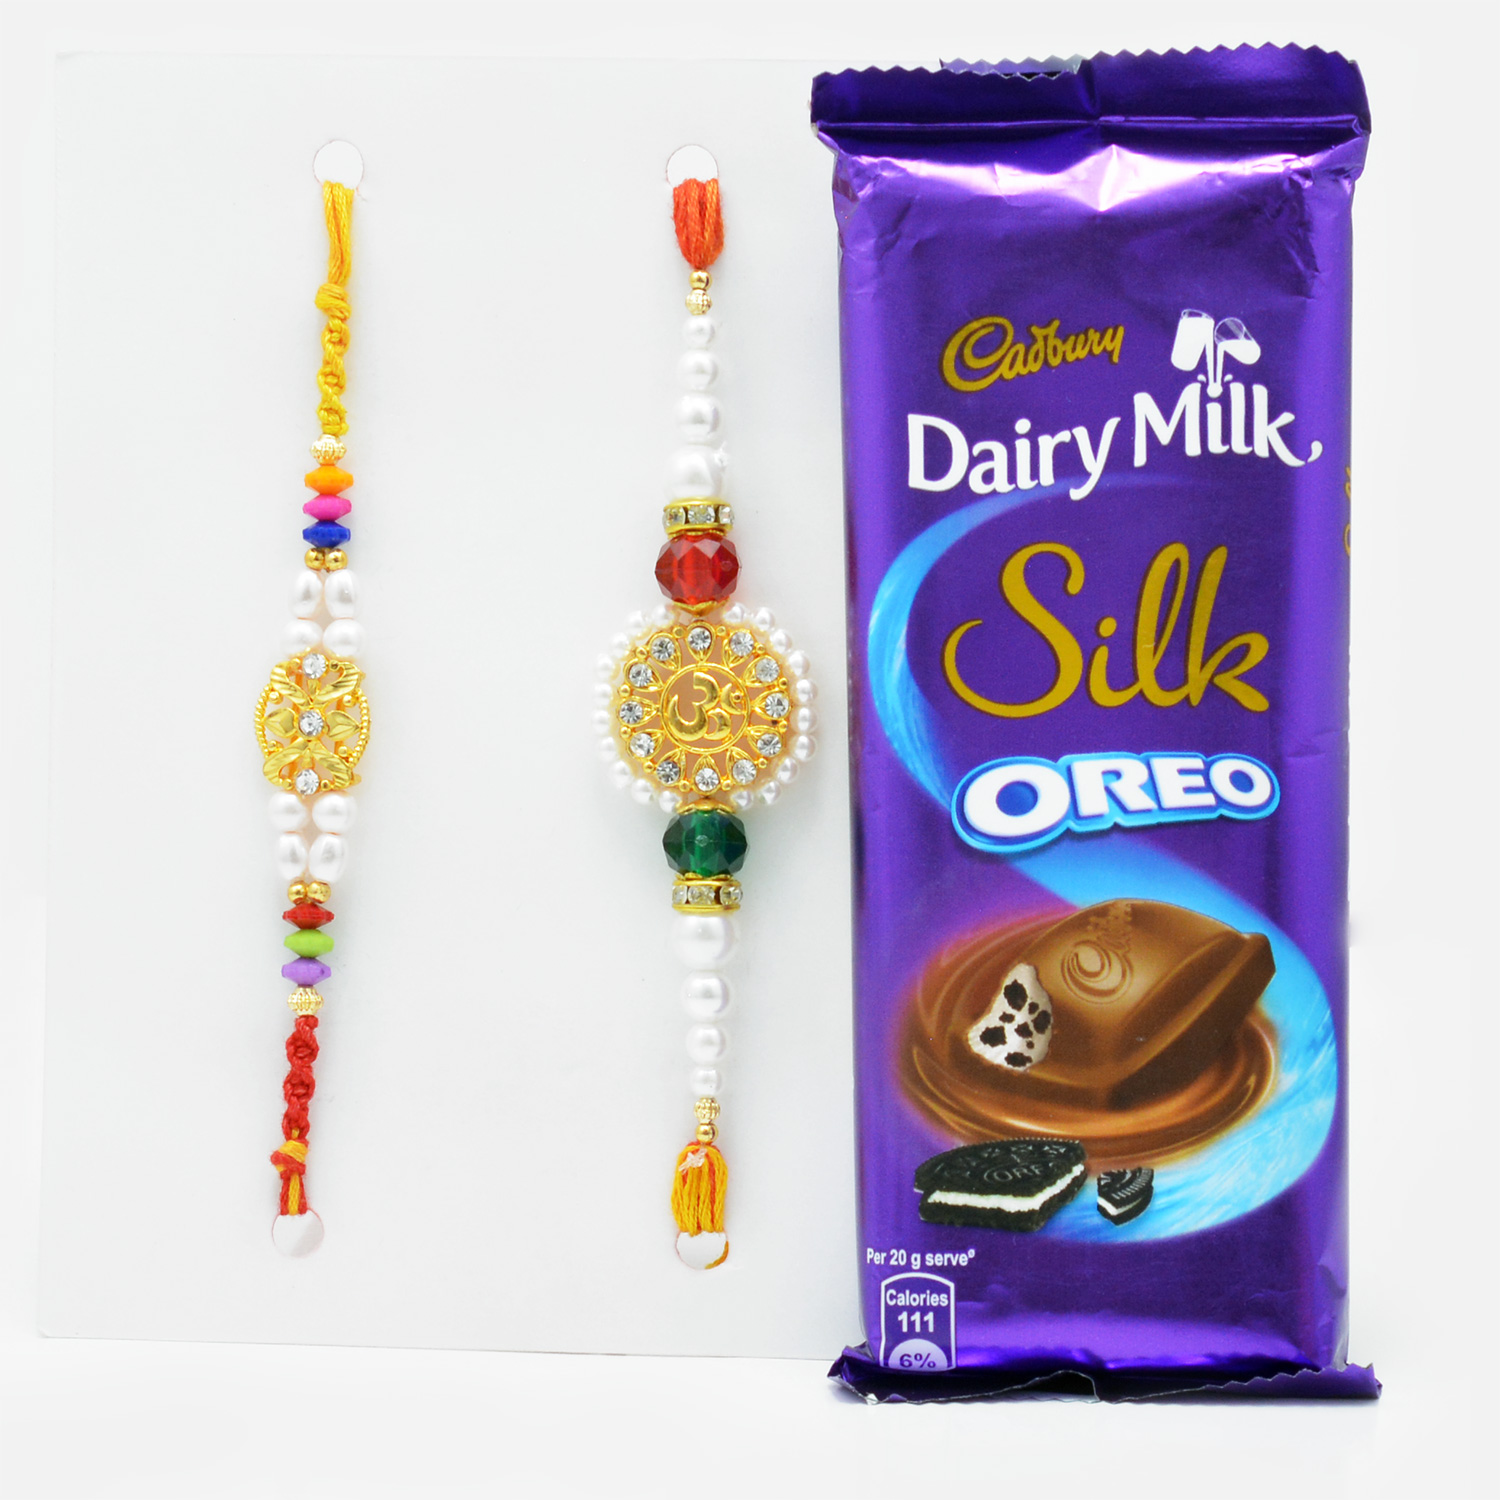 Delicate Golden Rakhi Set of 2 with Delicious Cadbury Dairy Milk Silk Oreo